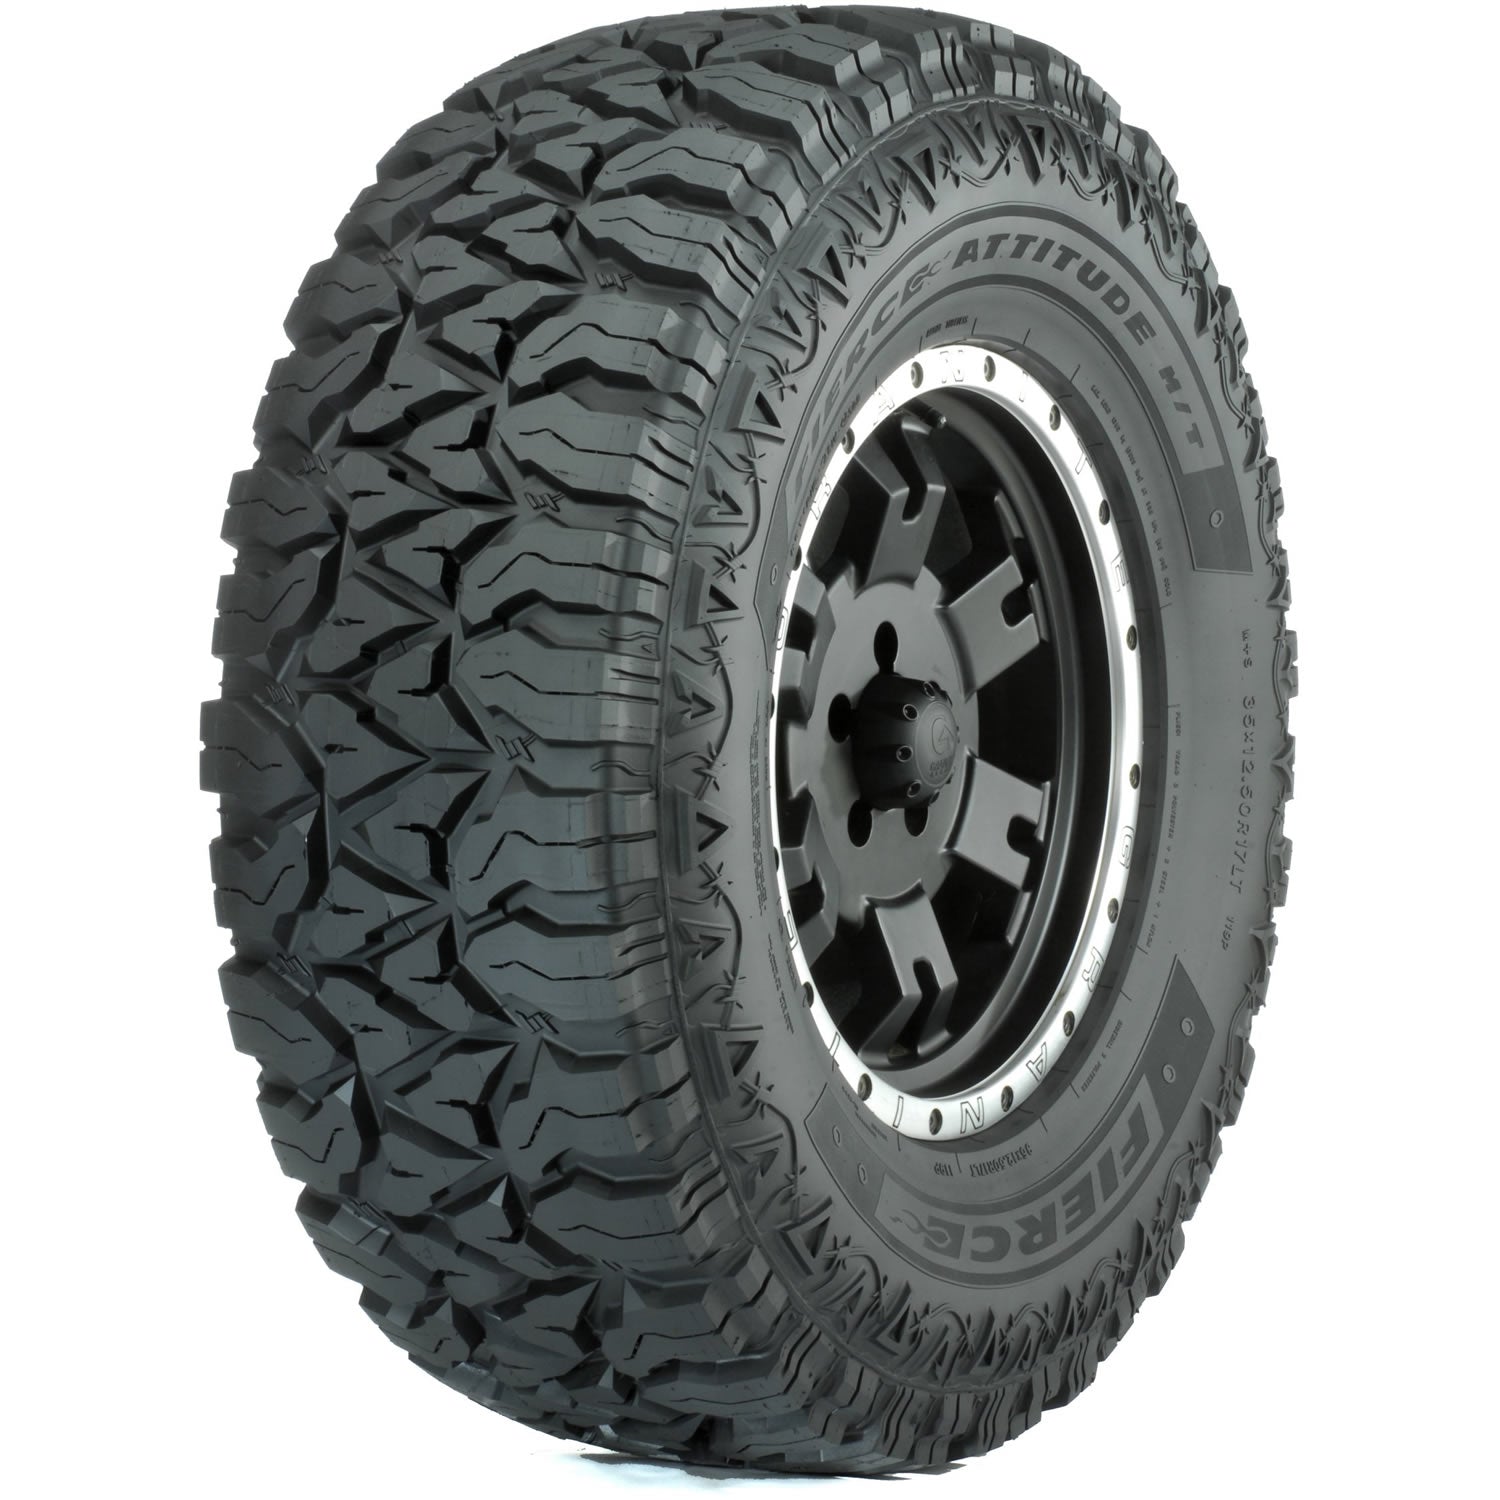 FIERCE ATTITUDE MT LT265/75R16 (31.7X10.5R 16) Tires